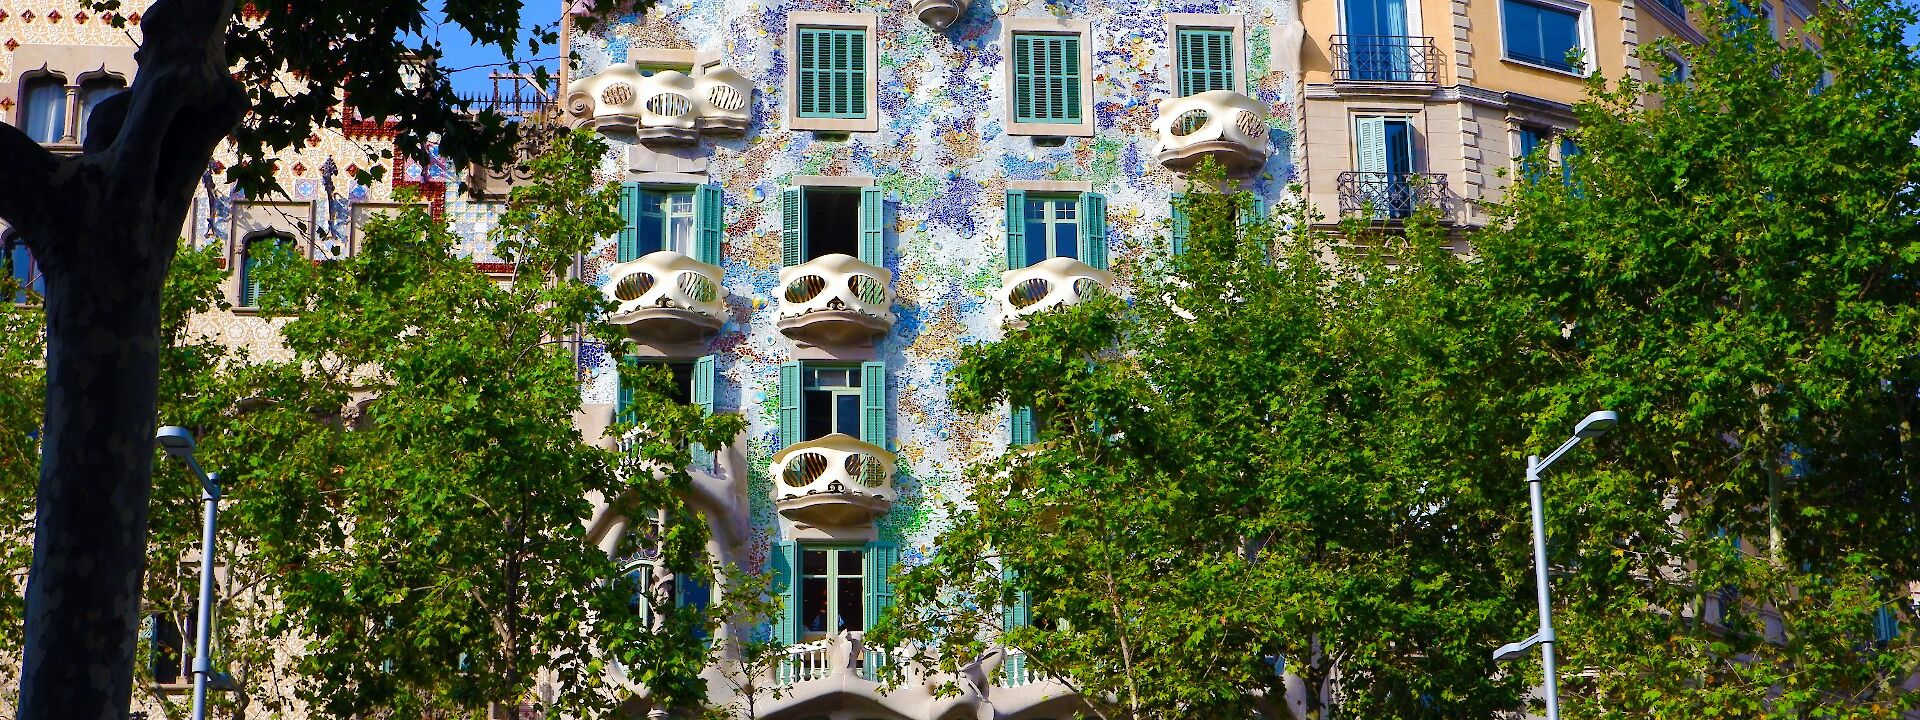 Trees fronting a beautiful building, Casa Batllo, Barcelona, Spain. Unsplash: Ruggiero Calabrese